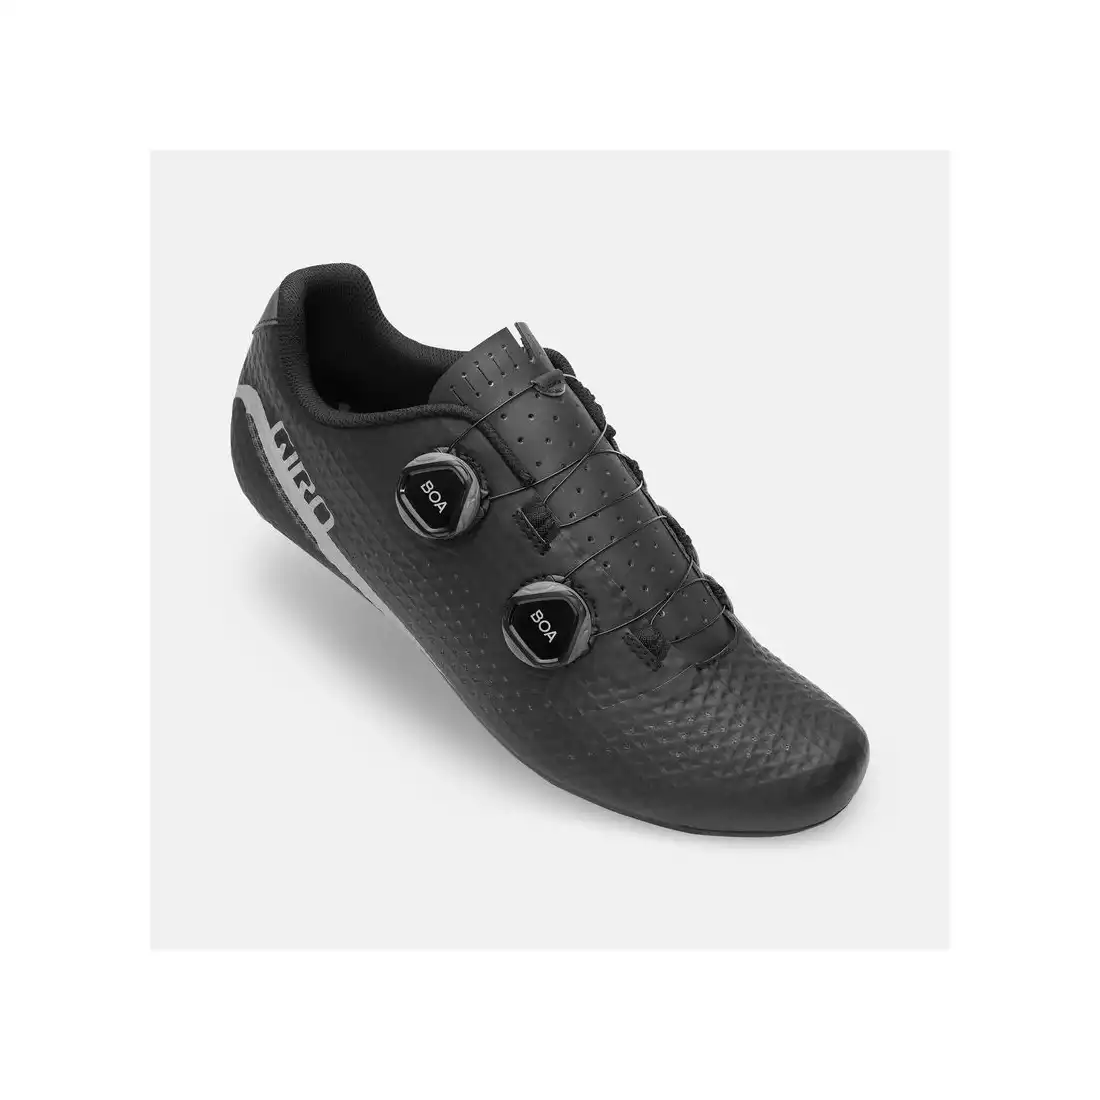 Specialized Men's Sport Rd Cycling Shoe Black EU 42 US 9 Brand New 